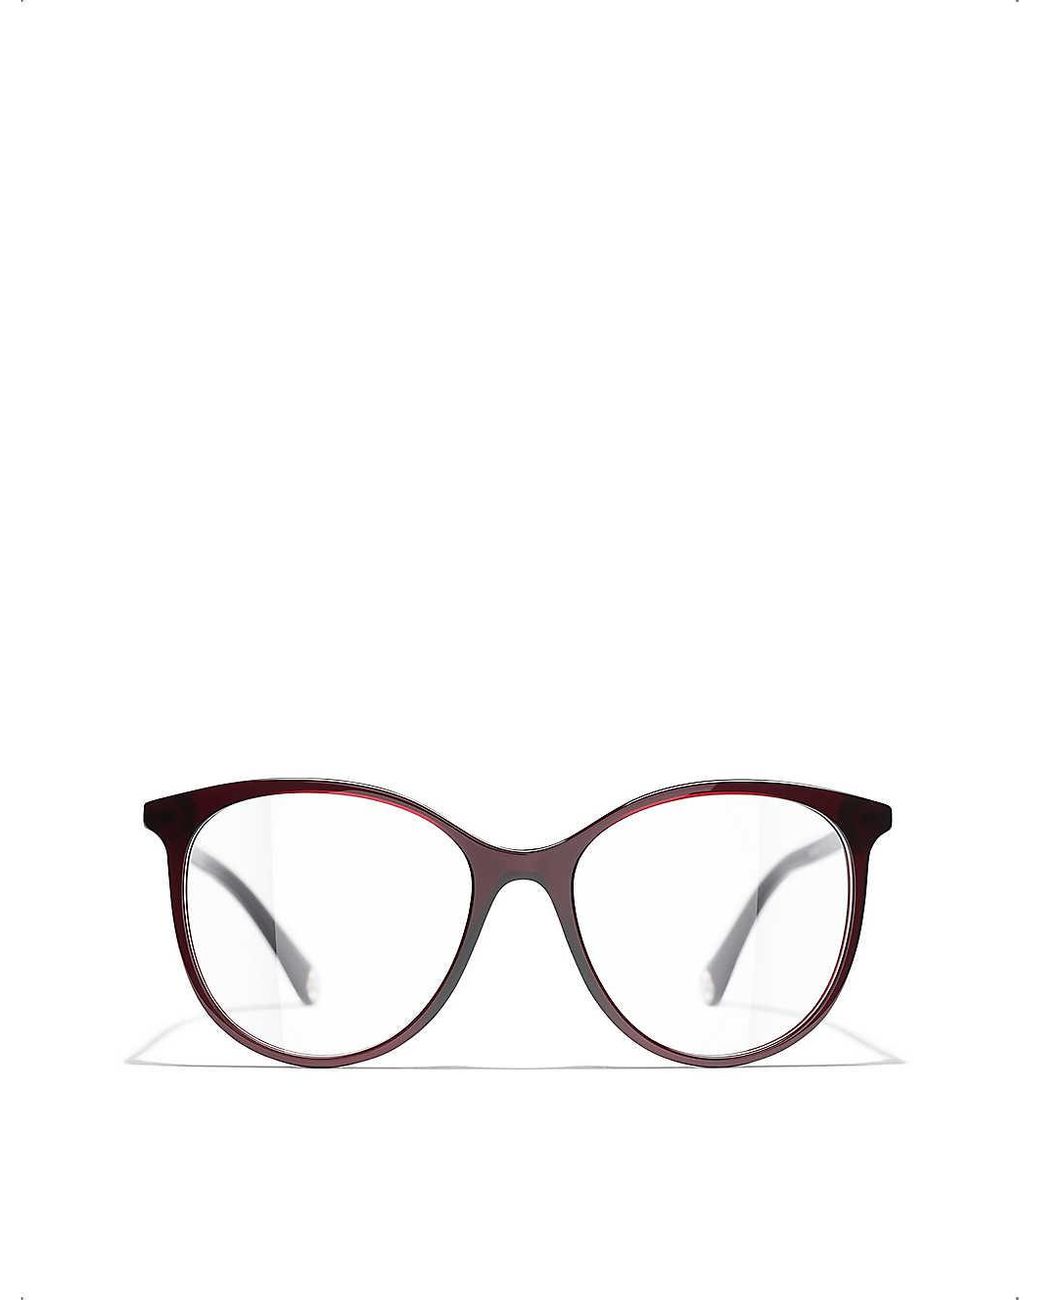 Chanel Pantos Eyeglasses in Red